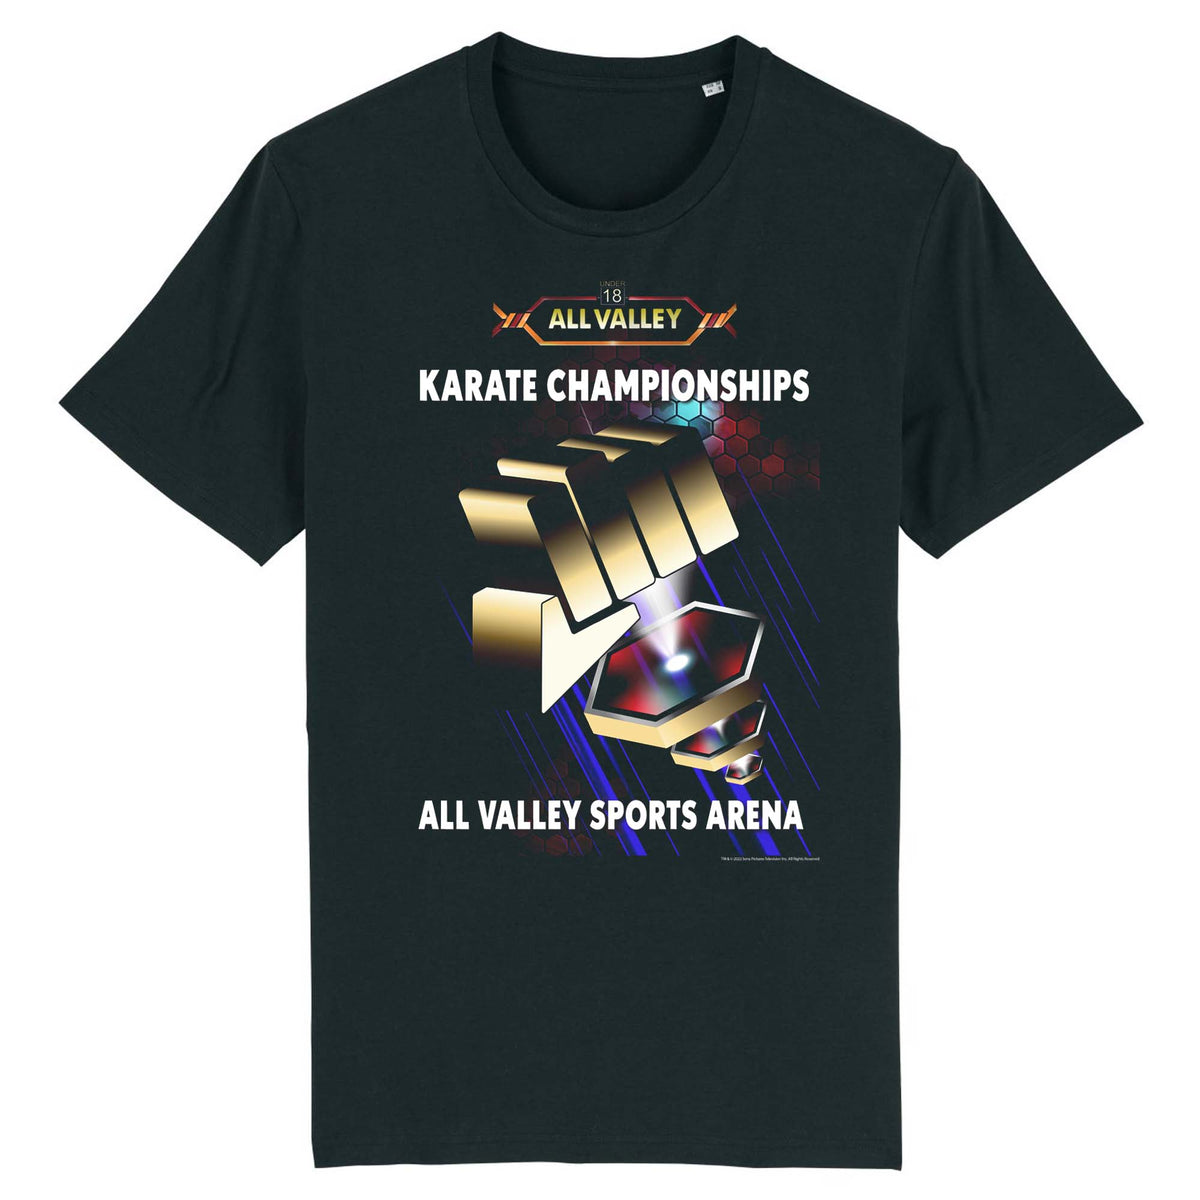 All Valley Championship 18 Event Black Unisex T-Shirt